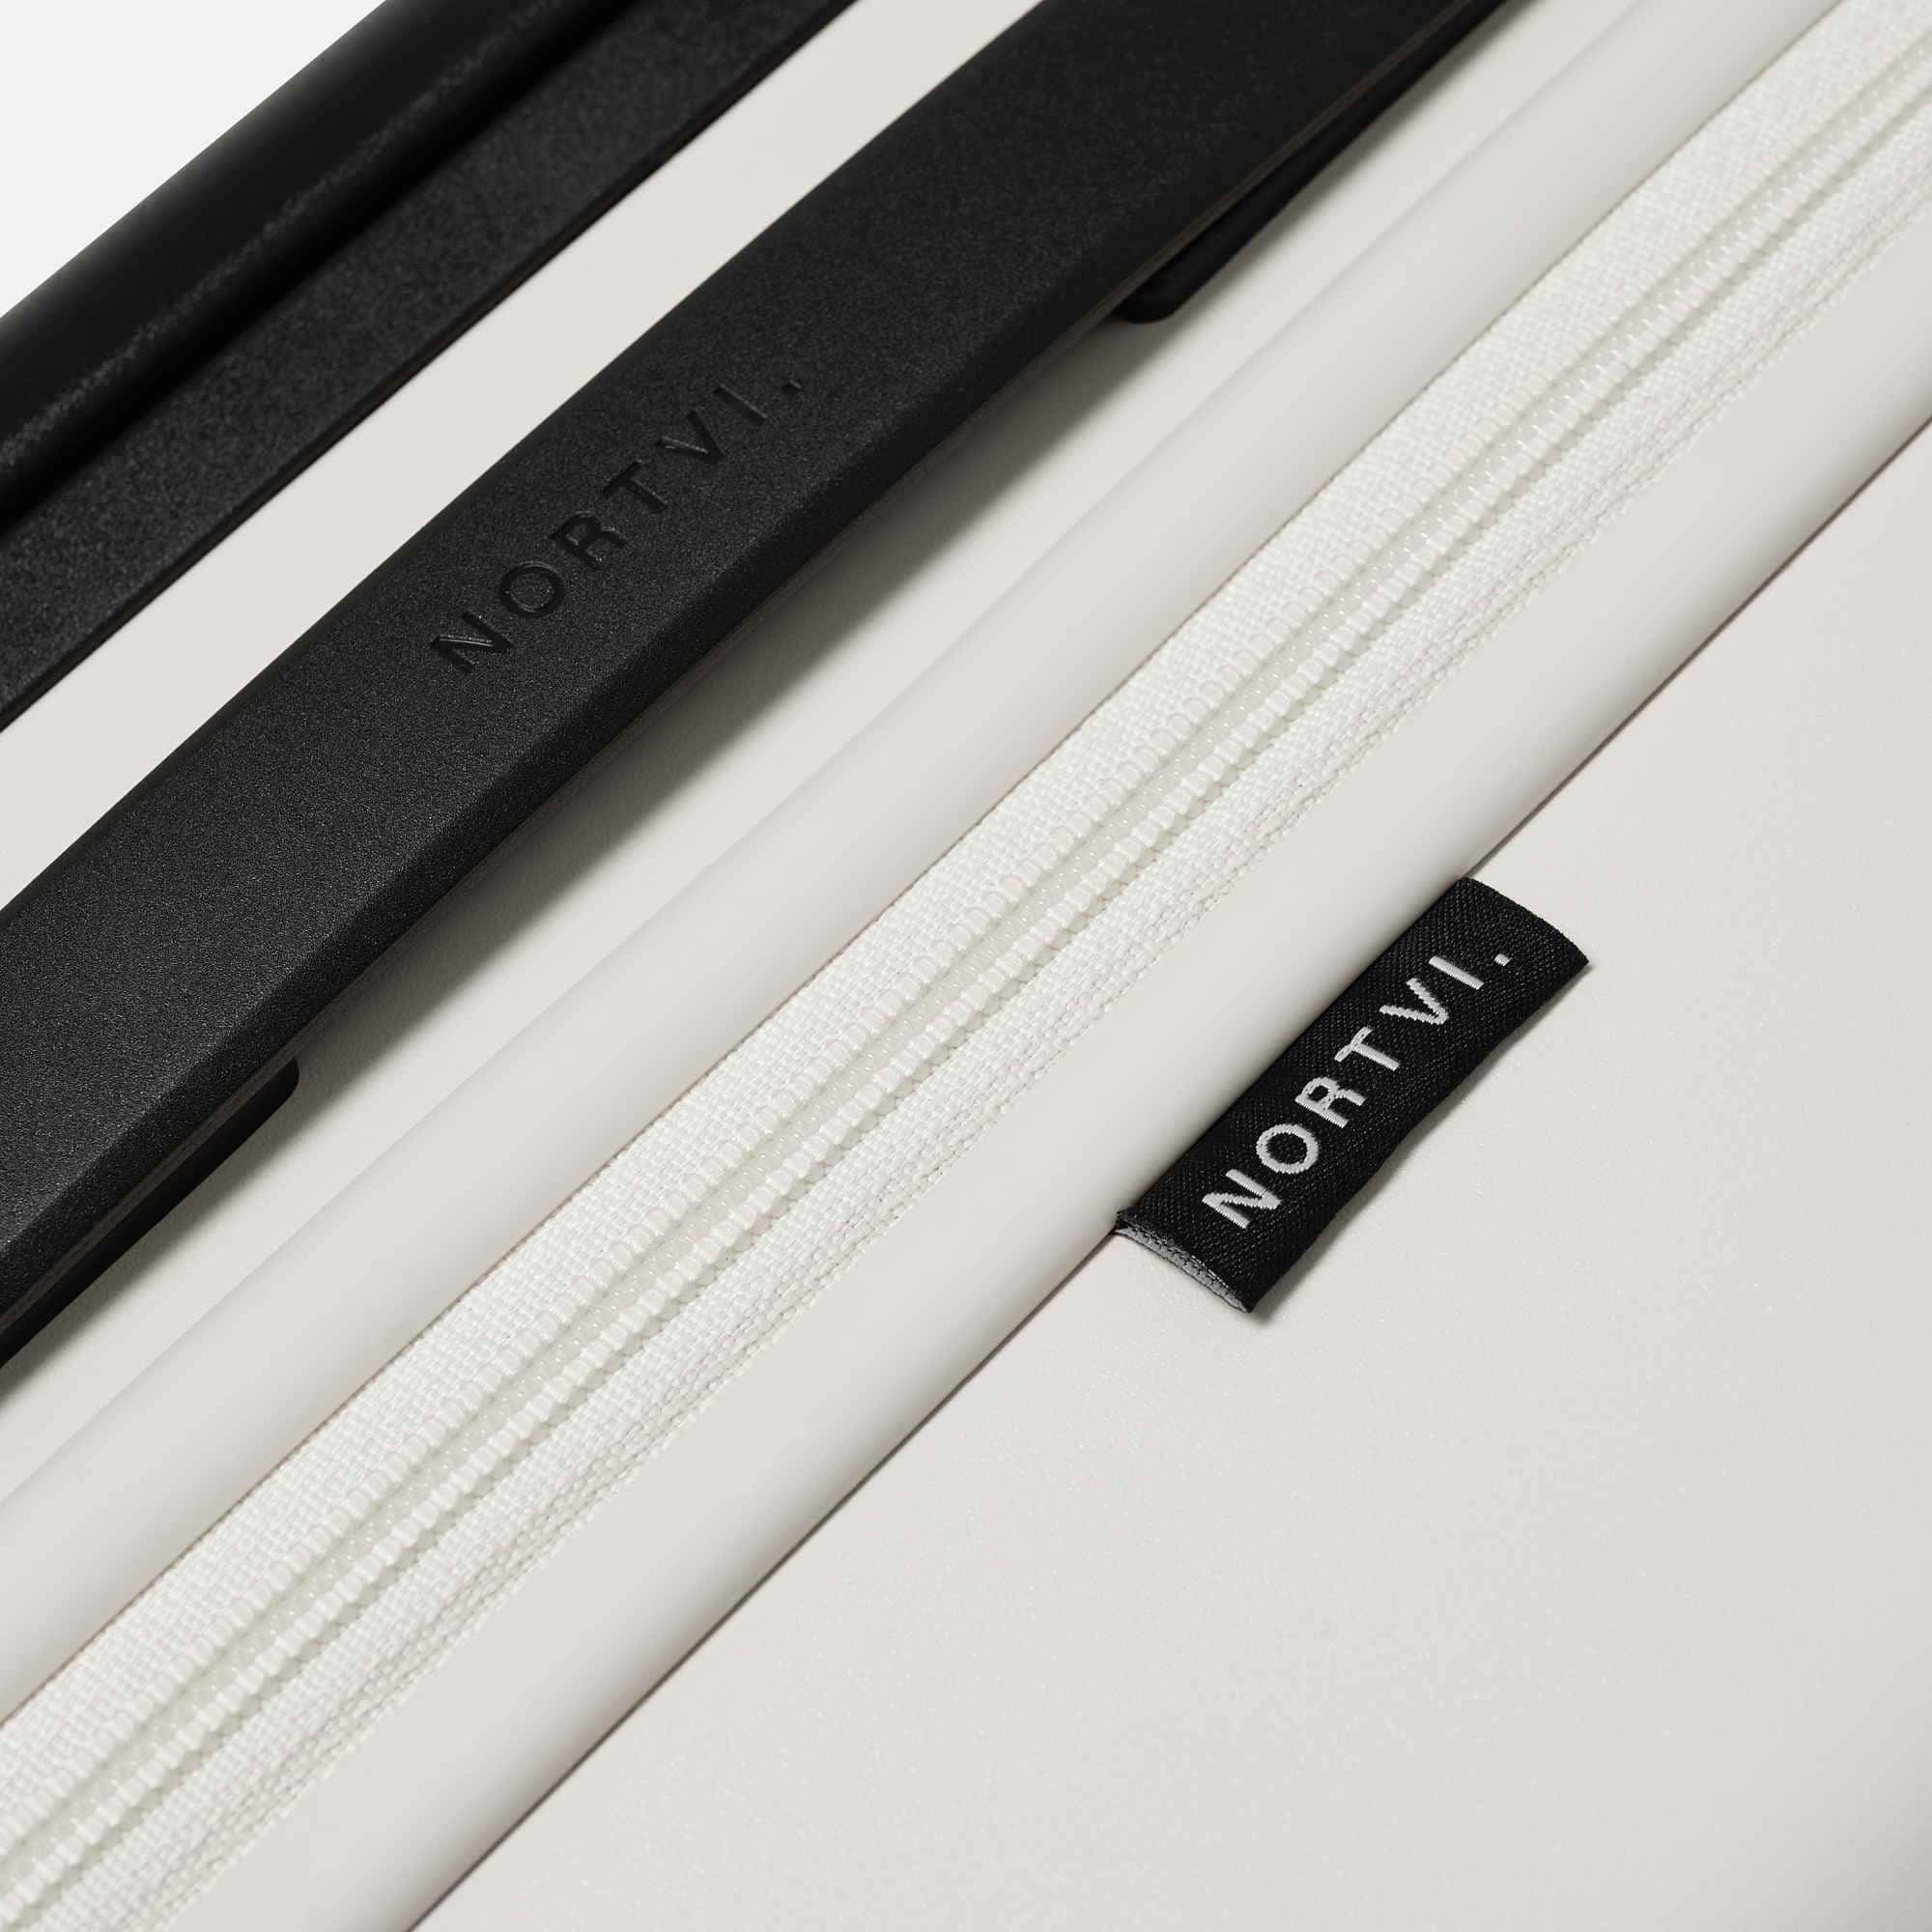 NORTVI sustainable design wit handbagage koffer, trolley suitcase gemaakt van duurzaam materiaal.